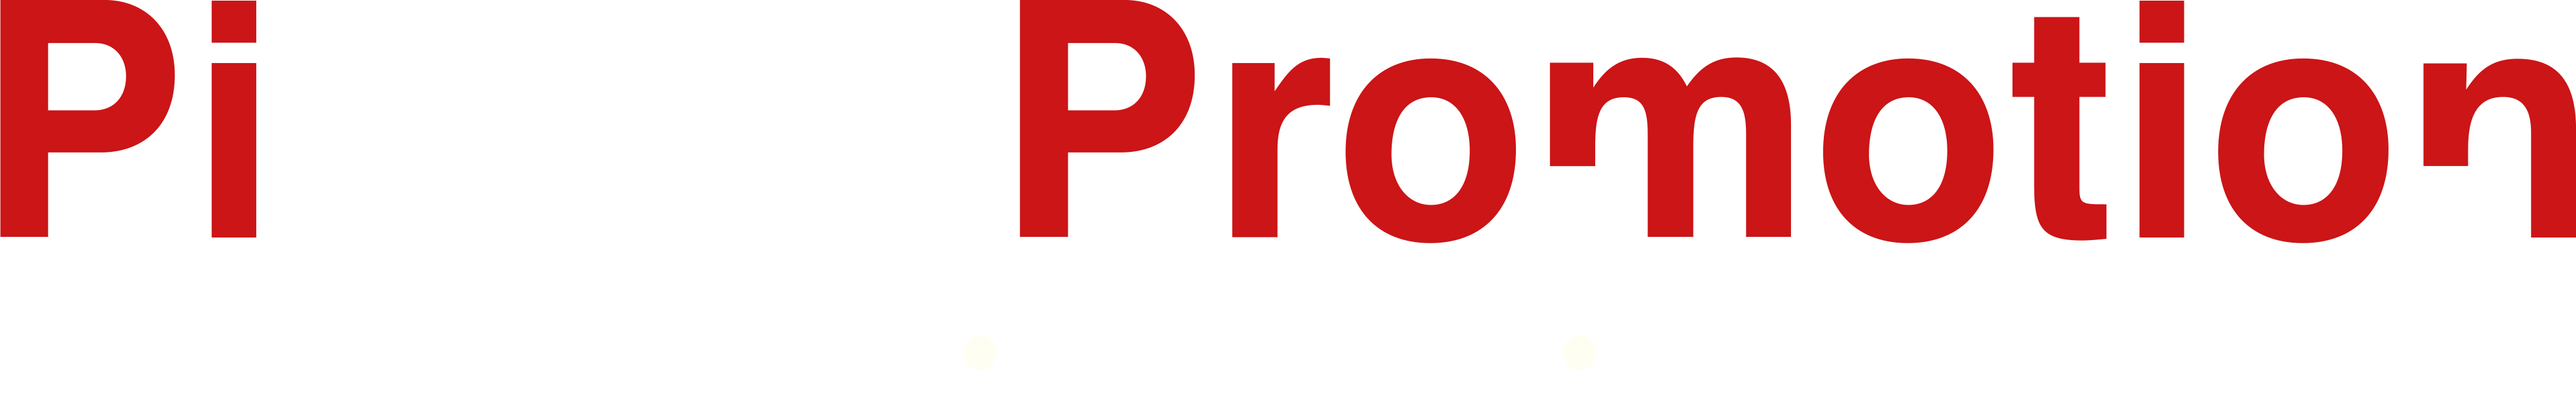 Pierre Promotion Logo